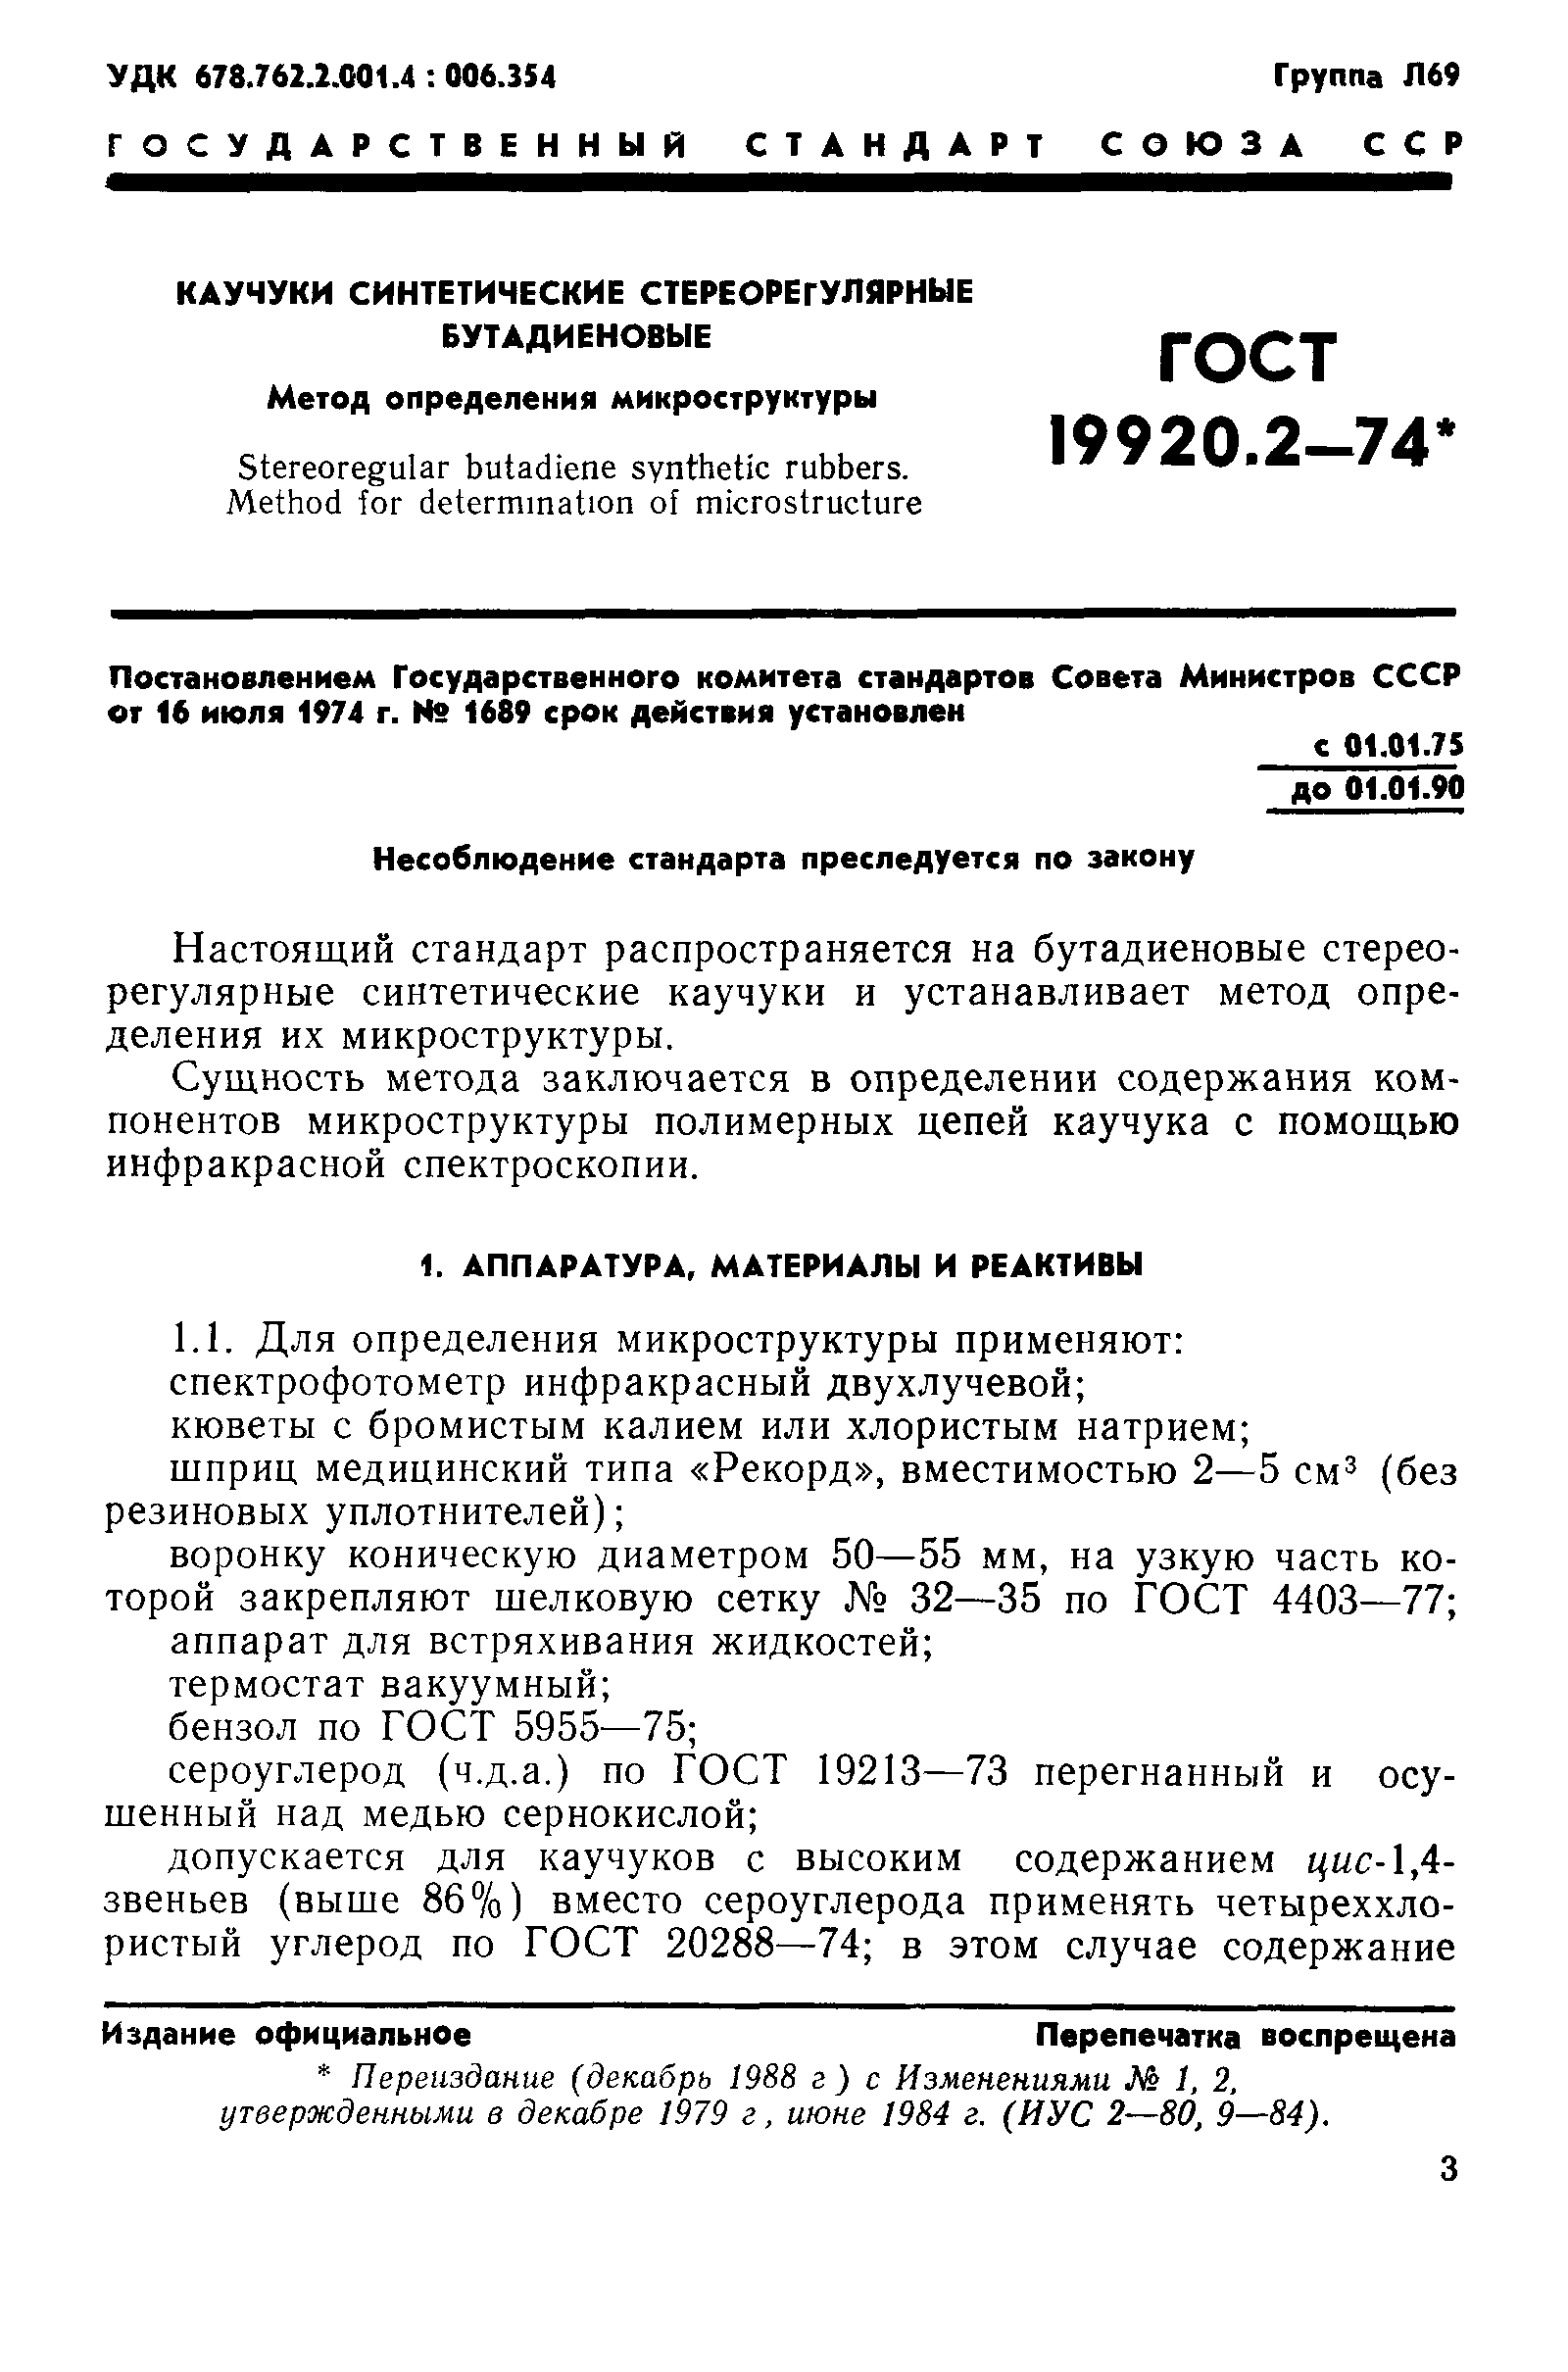 ГОСТ 19920.2-74